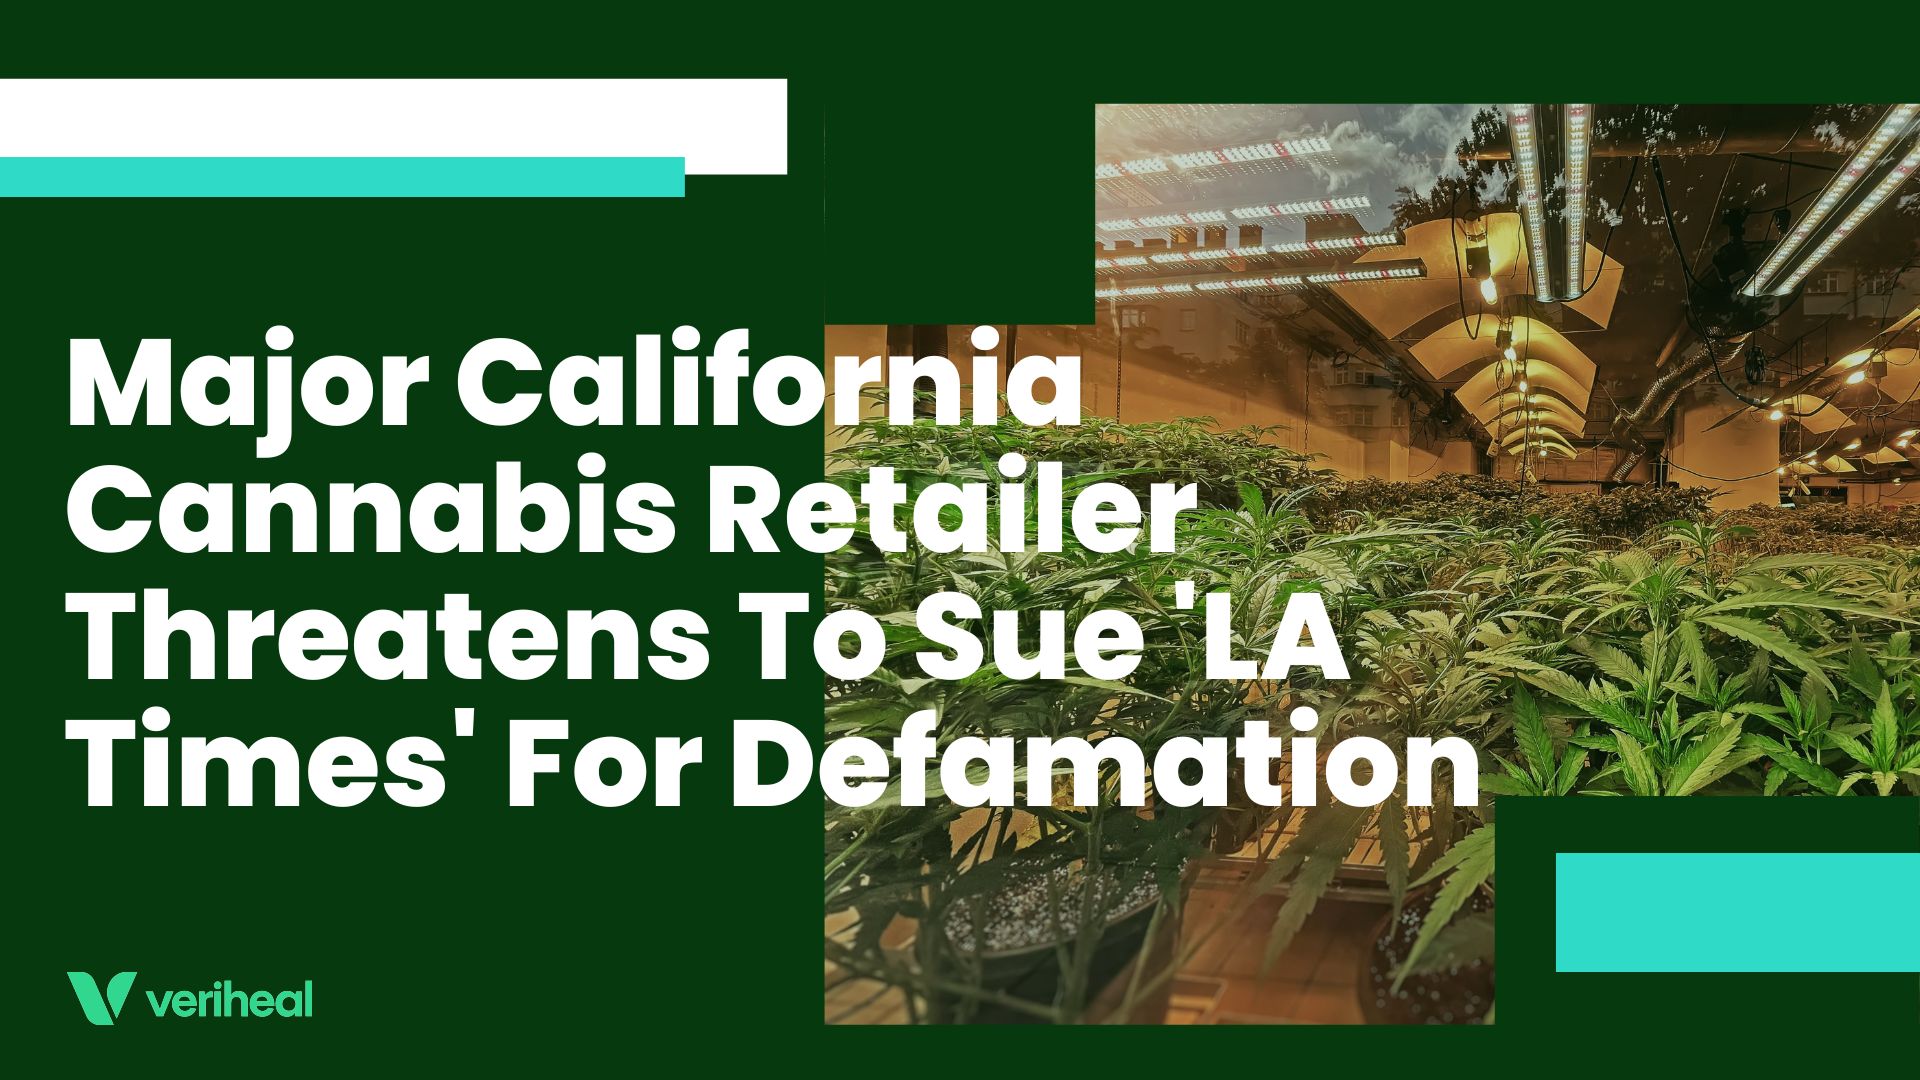 Major California Cannabis Retailer Threatens To Sue ‘LA Times’ For Defamation